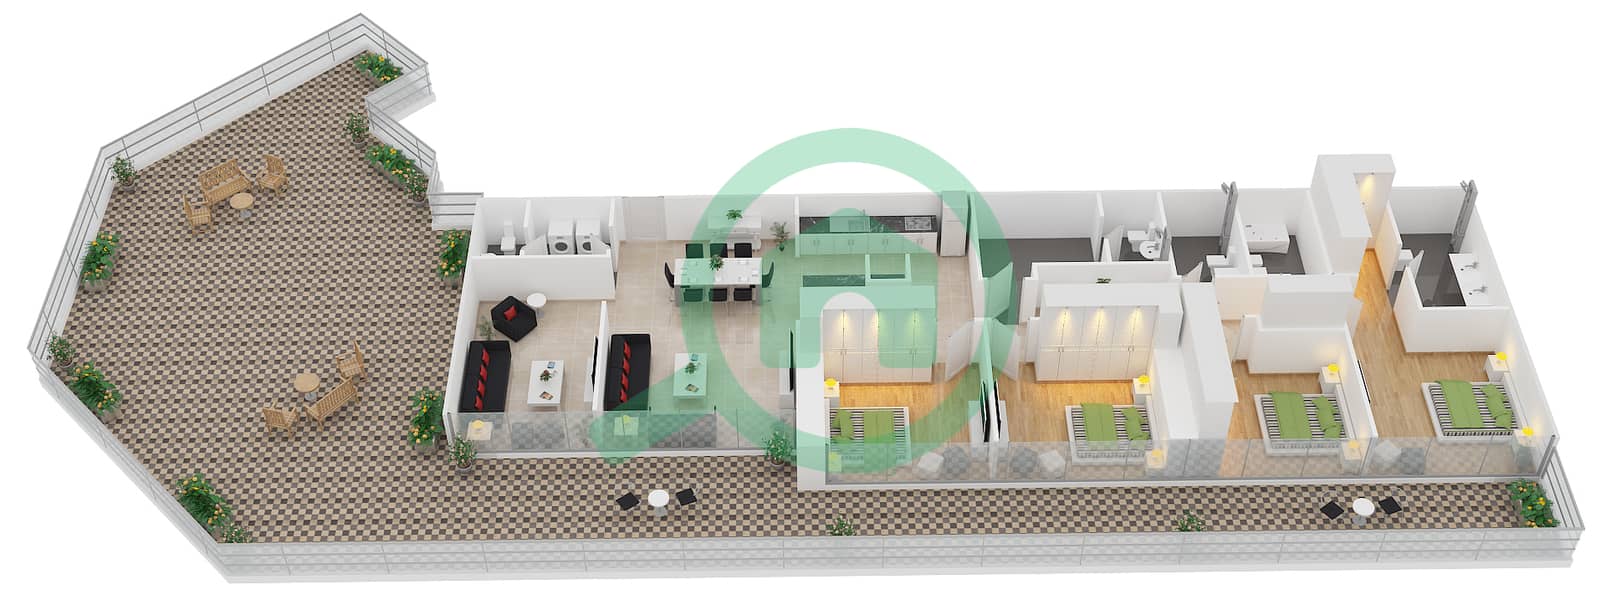 Zaya Hameni - 4 Bedroom Apartment Type E1 Floor plan interactive3D